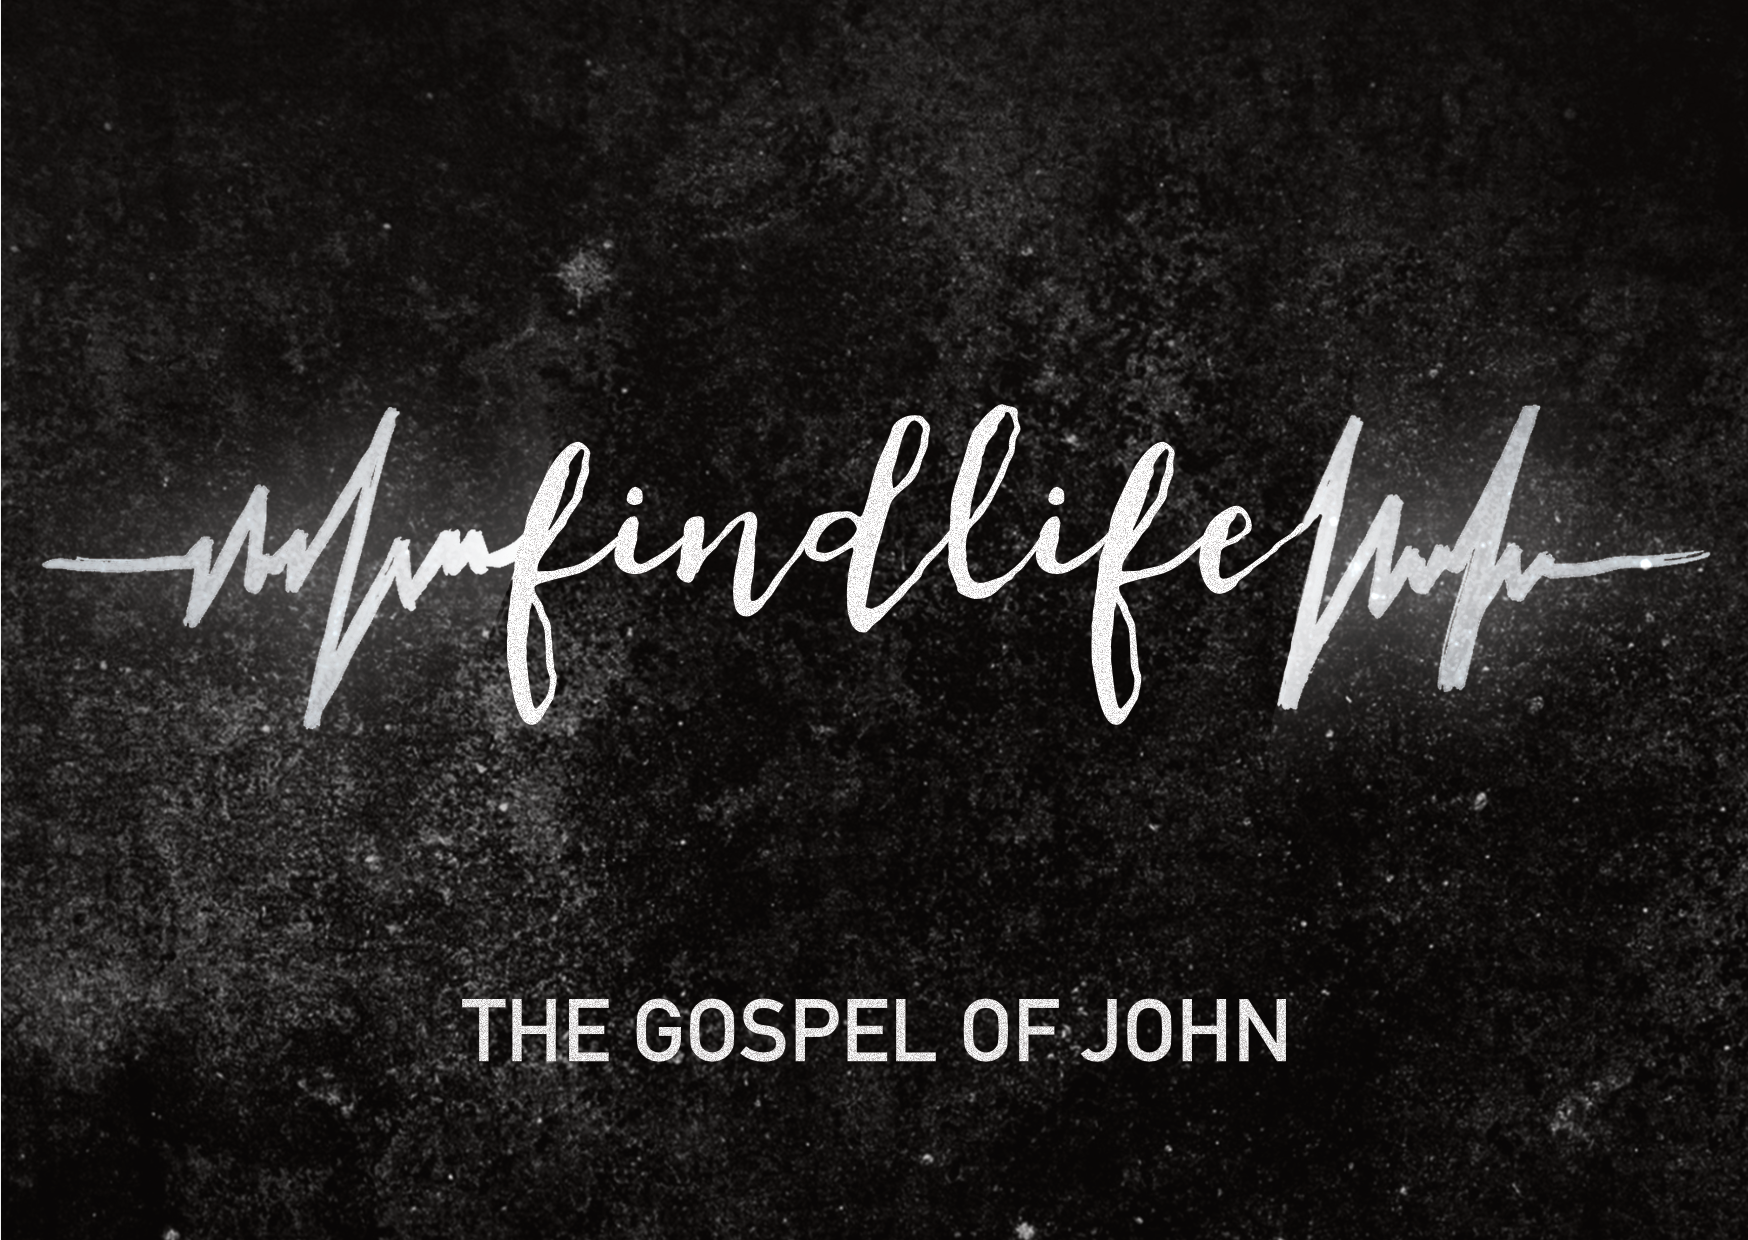 Gospel of John - Final.png